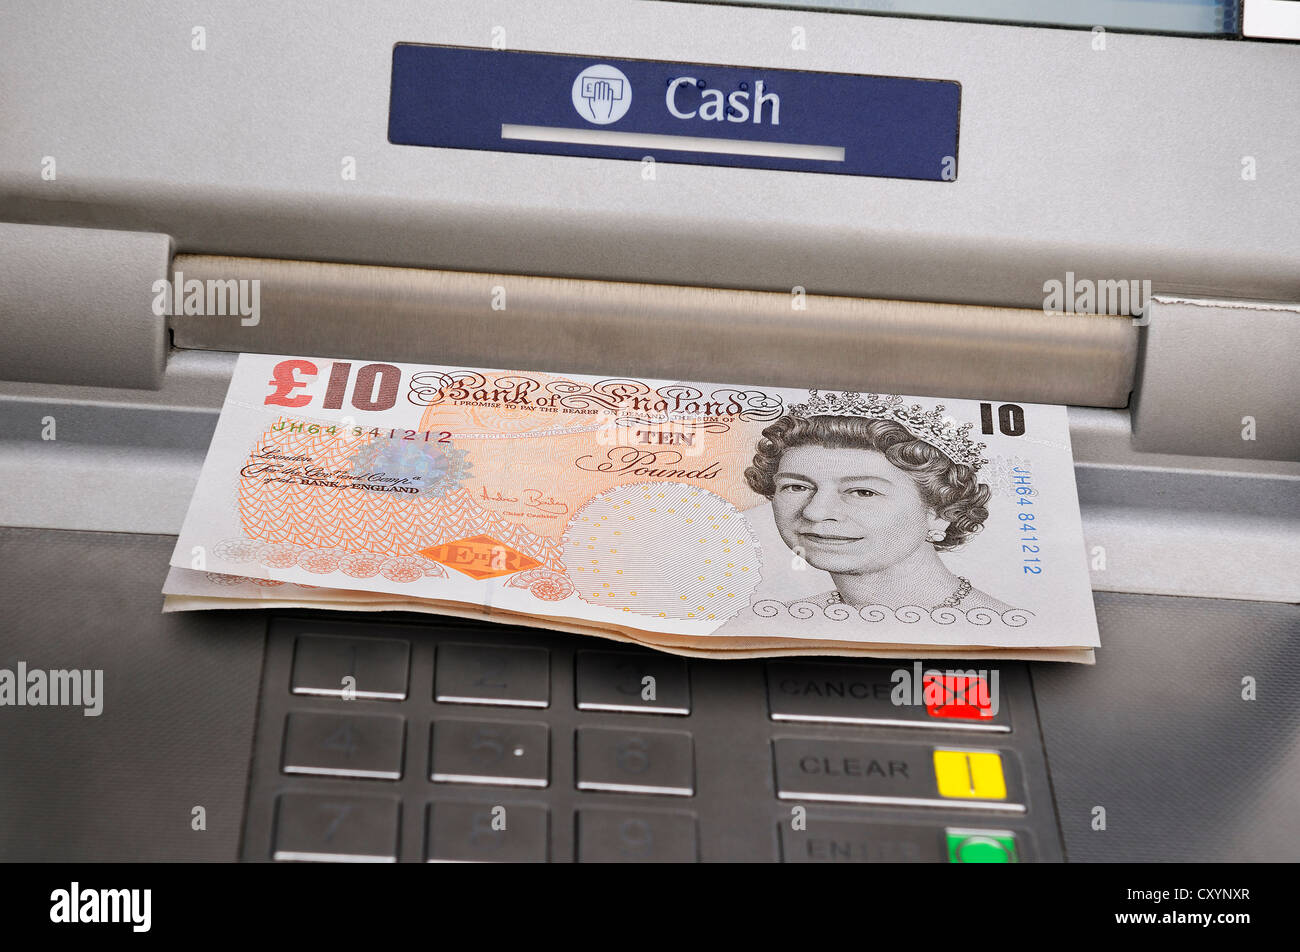 Cashpoint Dispensing Cash, UK. Stock Photo